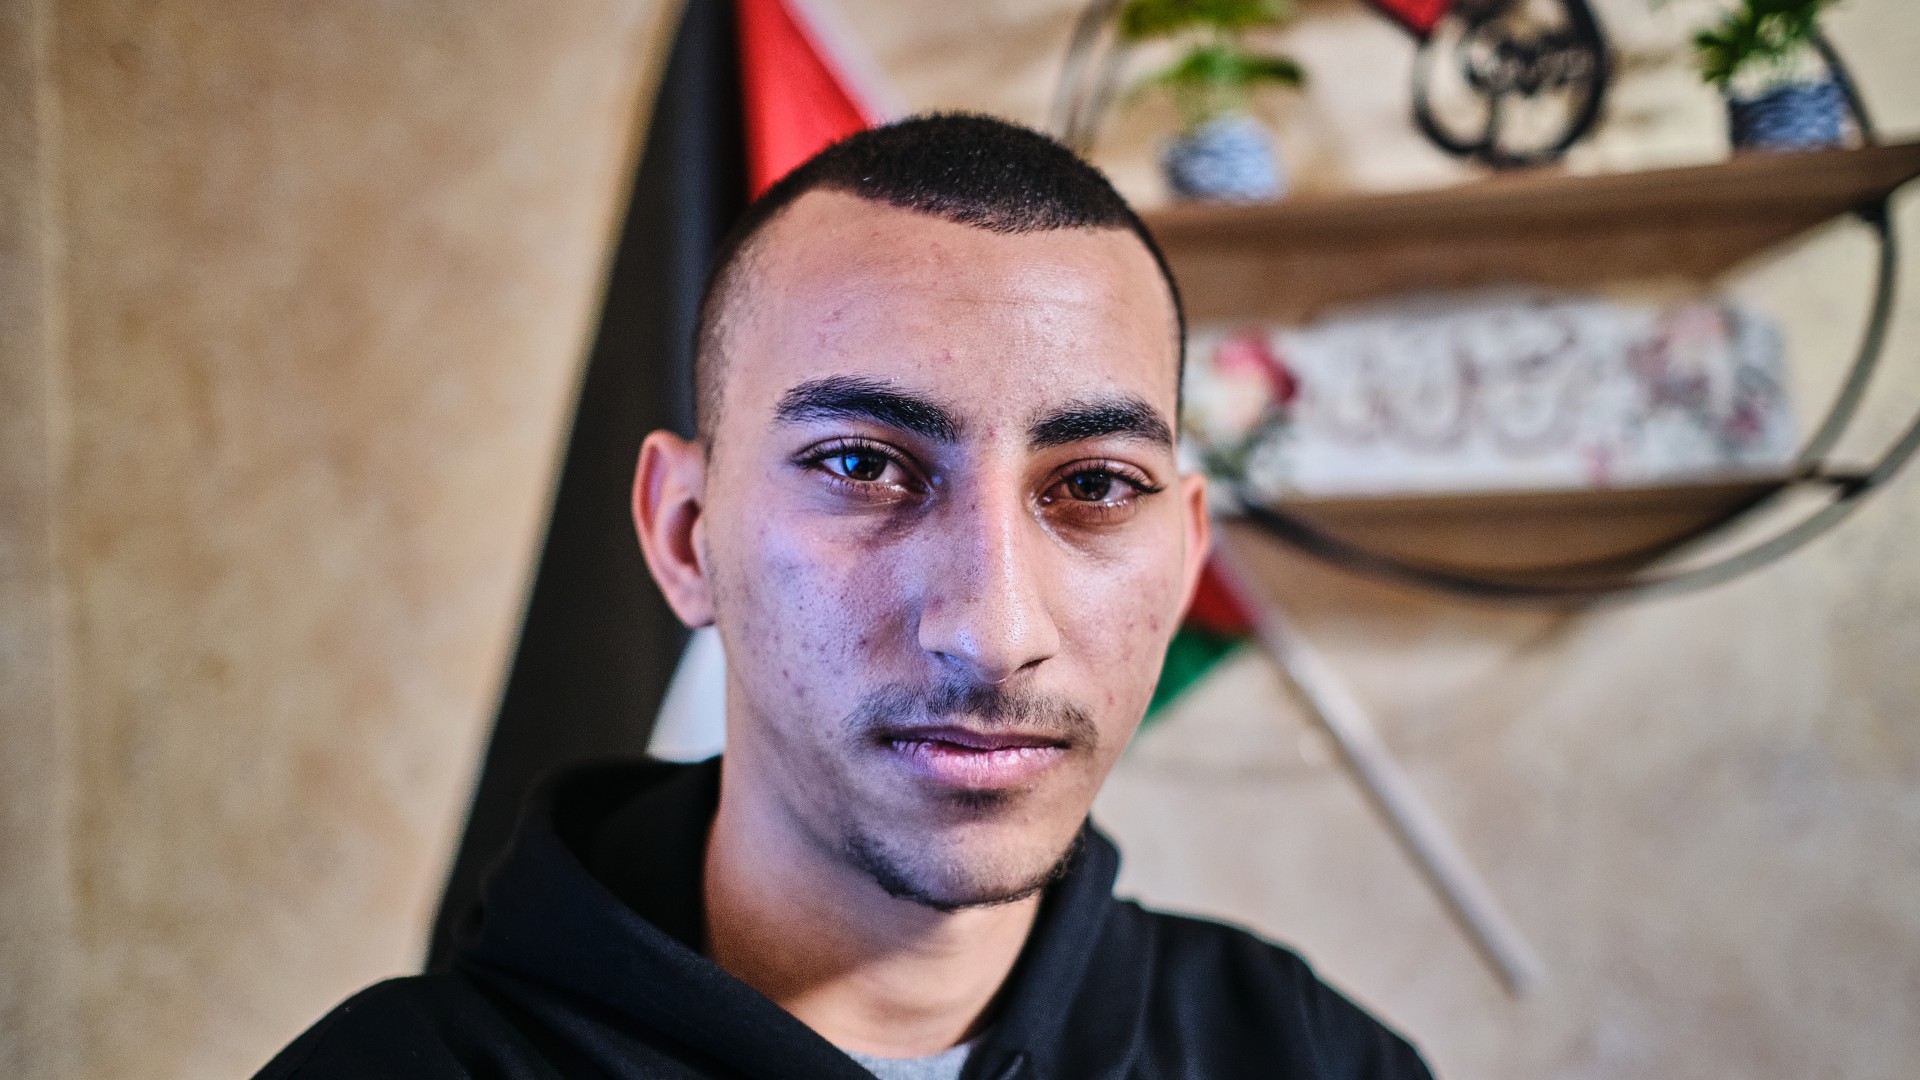 Abdul Rahman al-Zarim, 18, was held in Ktziot prison in the Negev desert (MEE/Angelo Calianno)